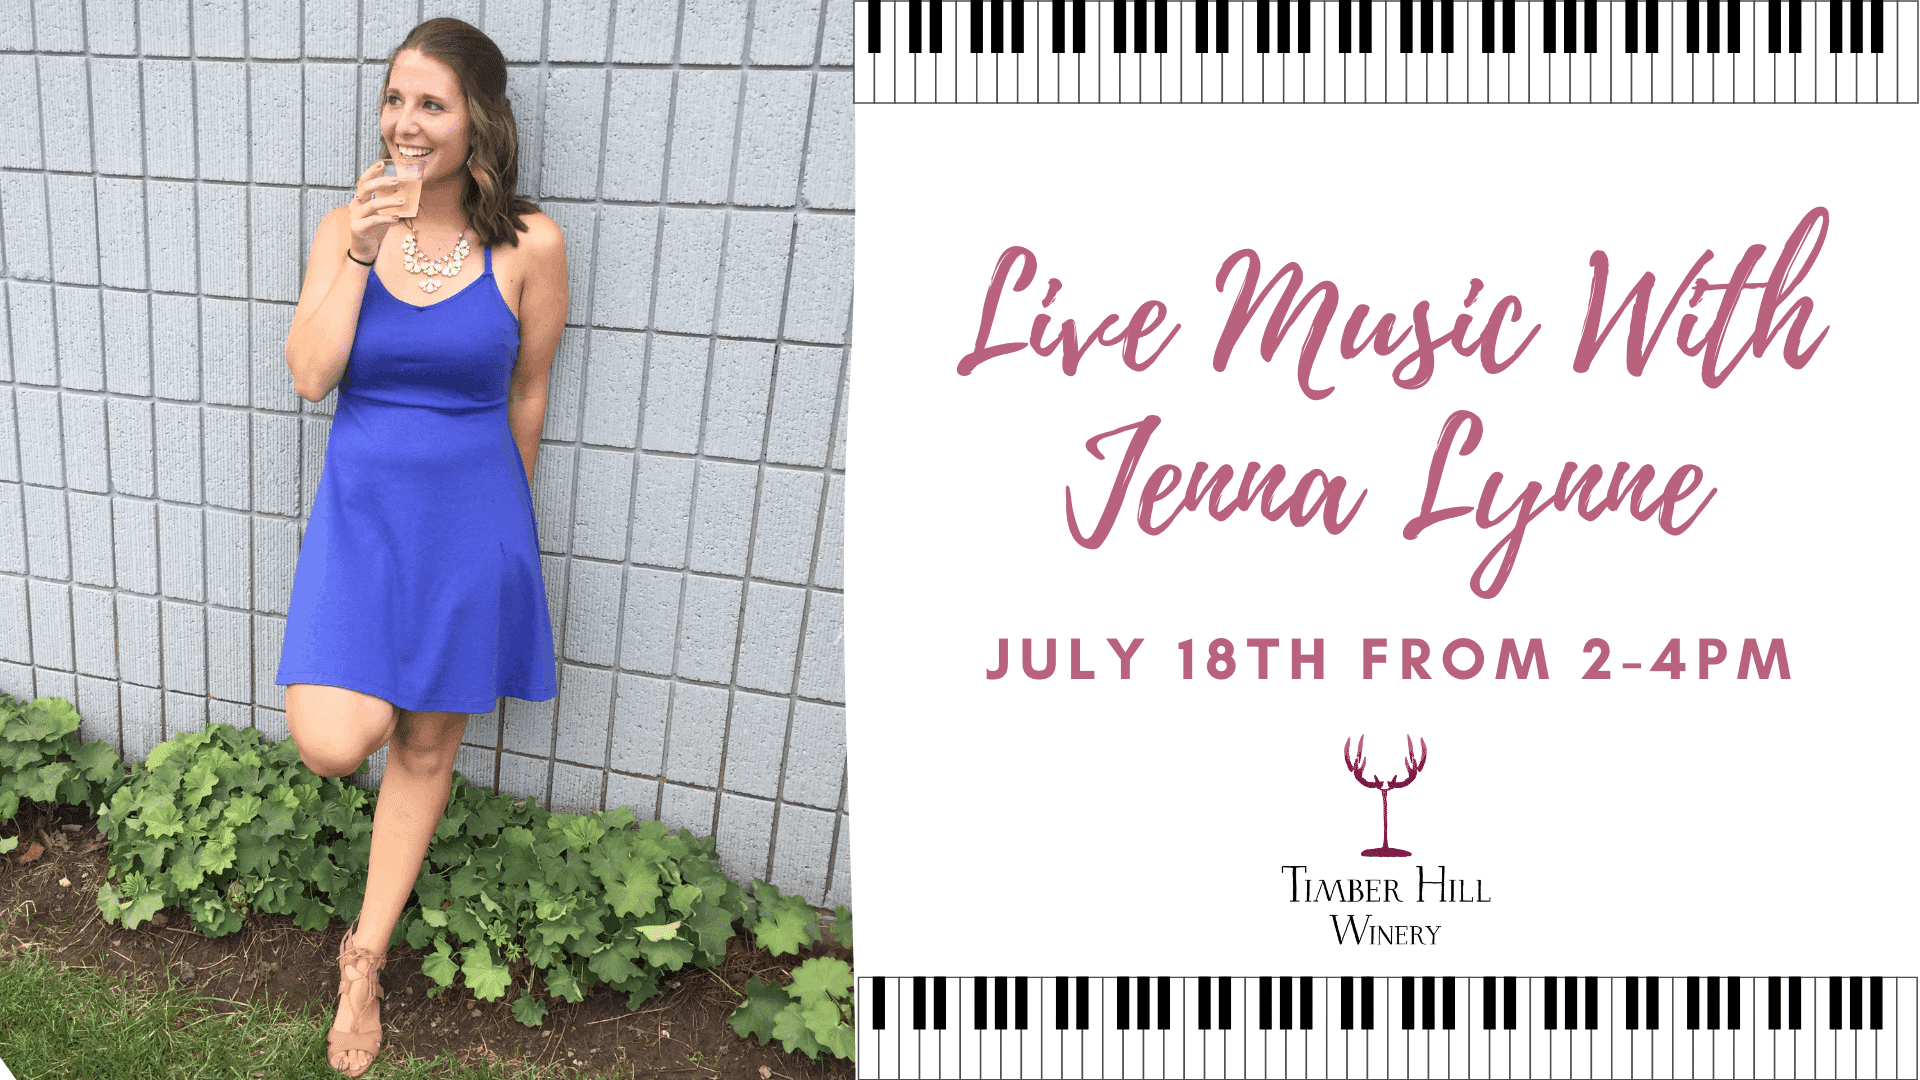 Live Music With Jenna Lynne